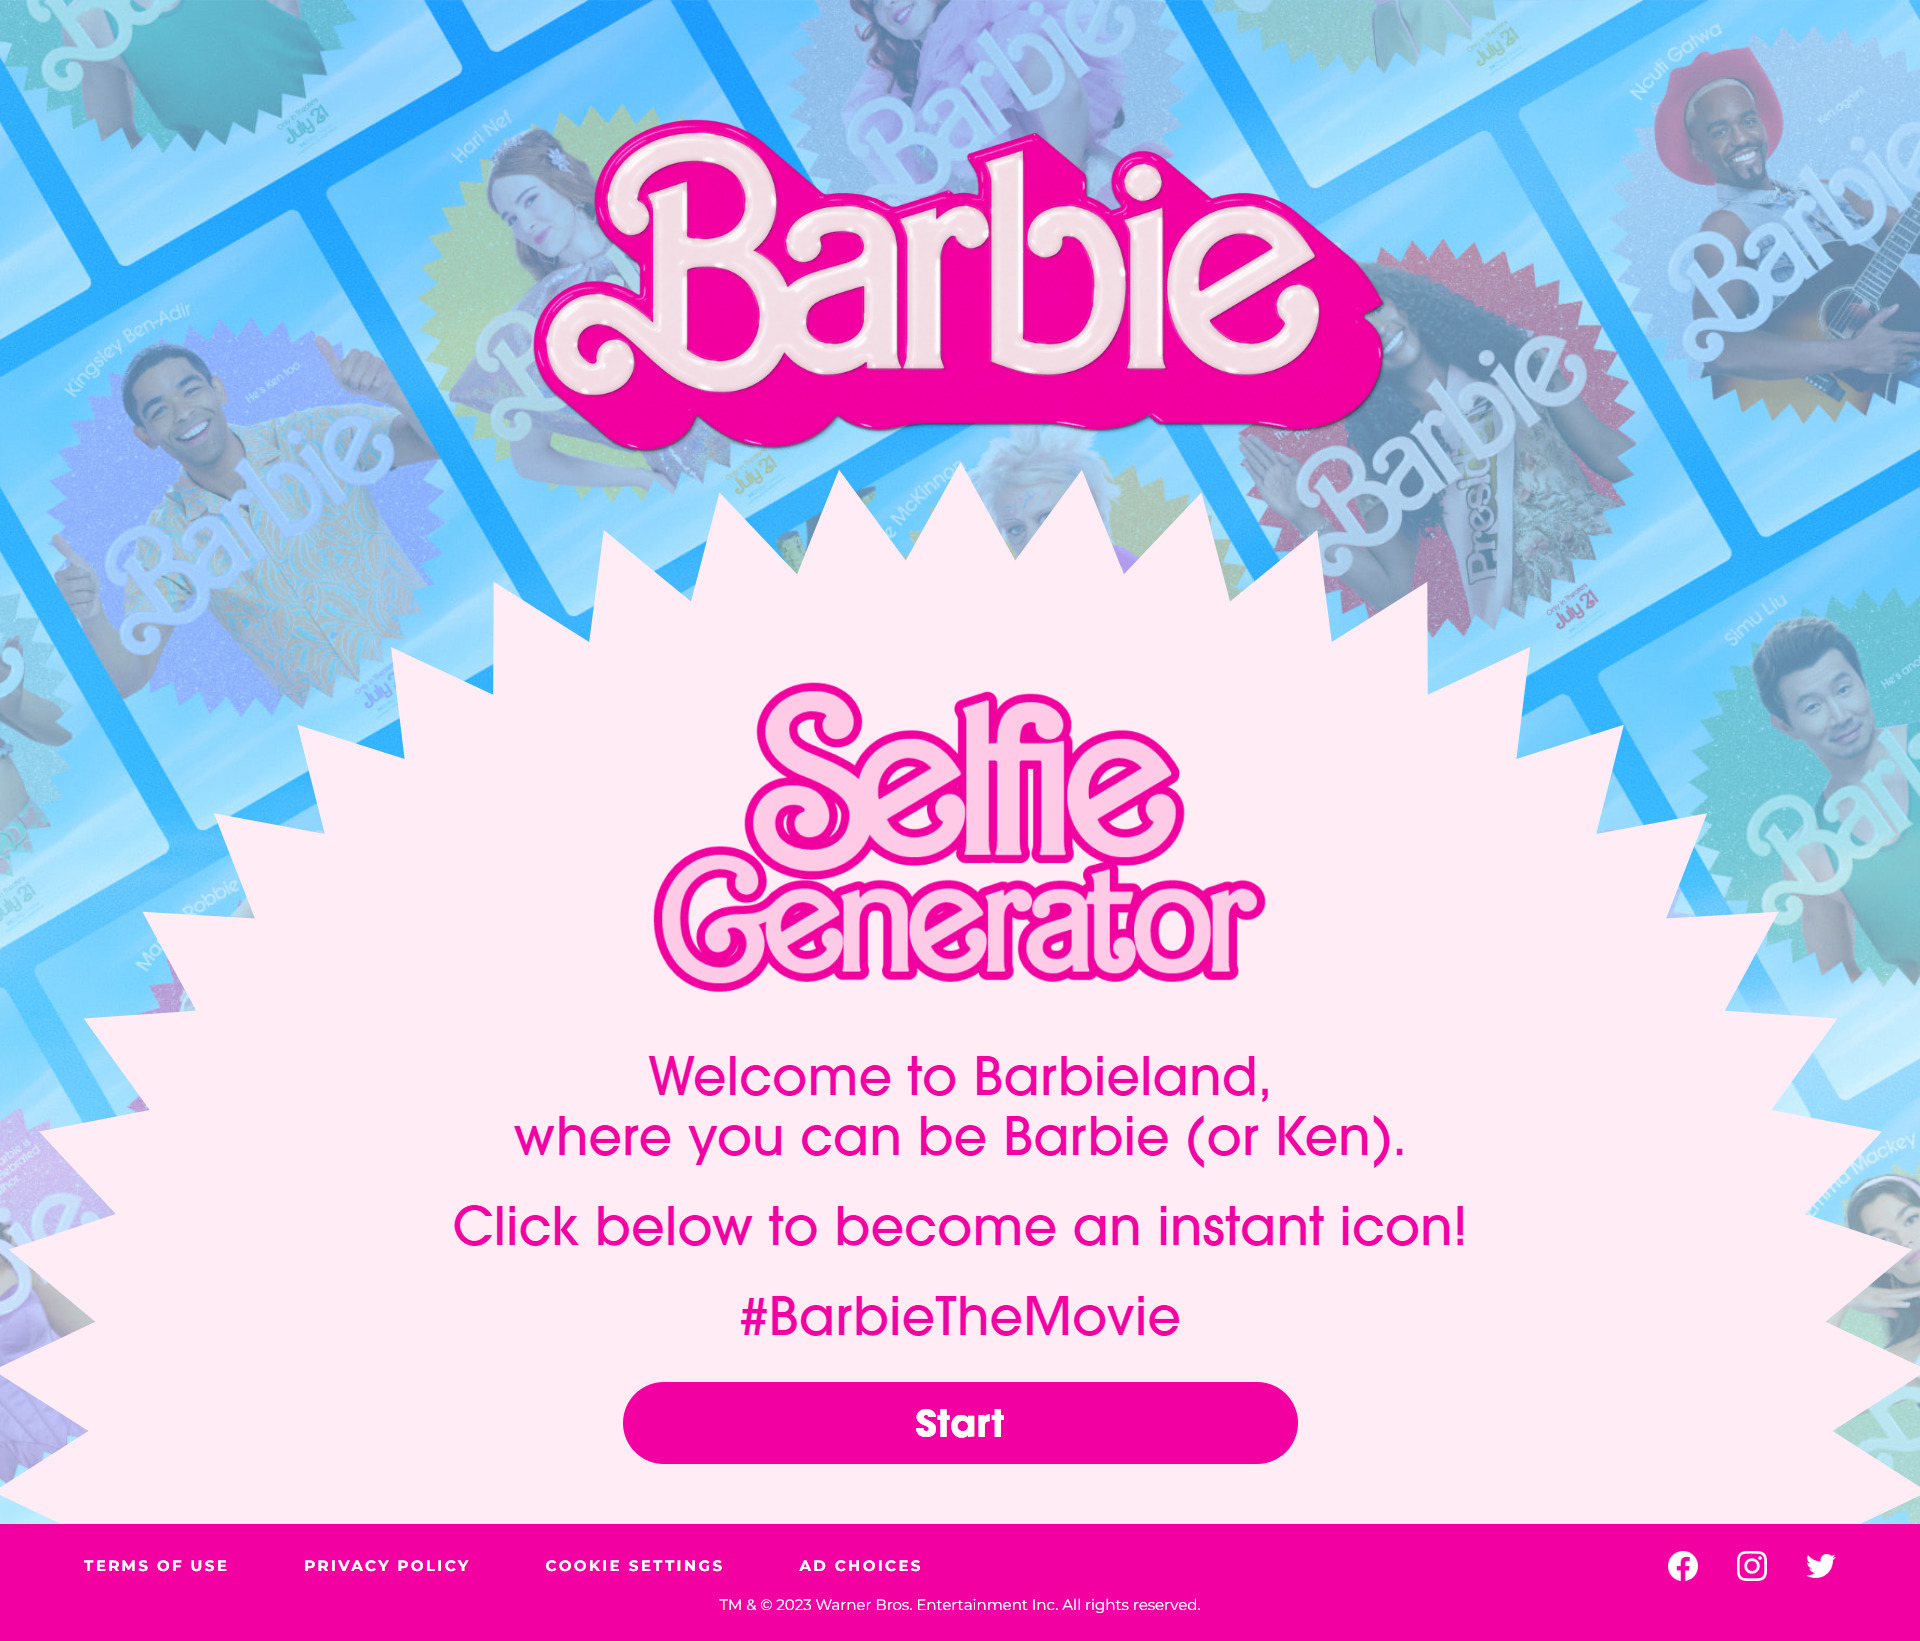 How to Make Your Own Barbie Poster: Barbie Selfie Generator Meme